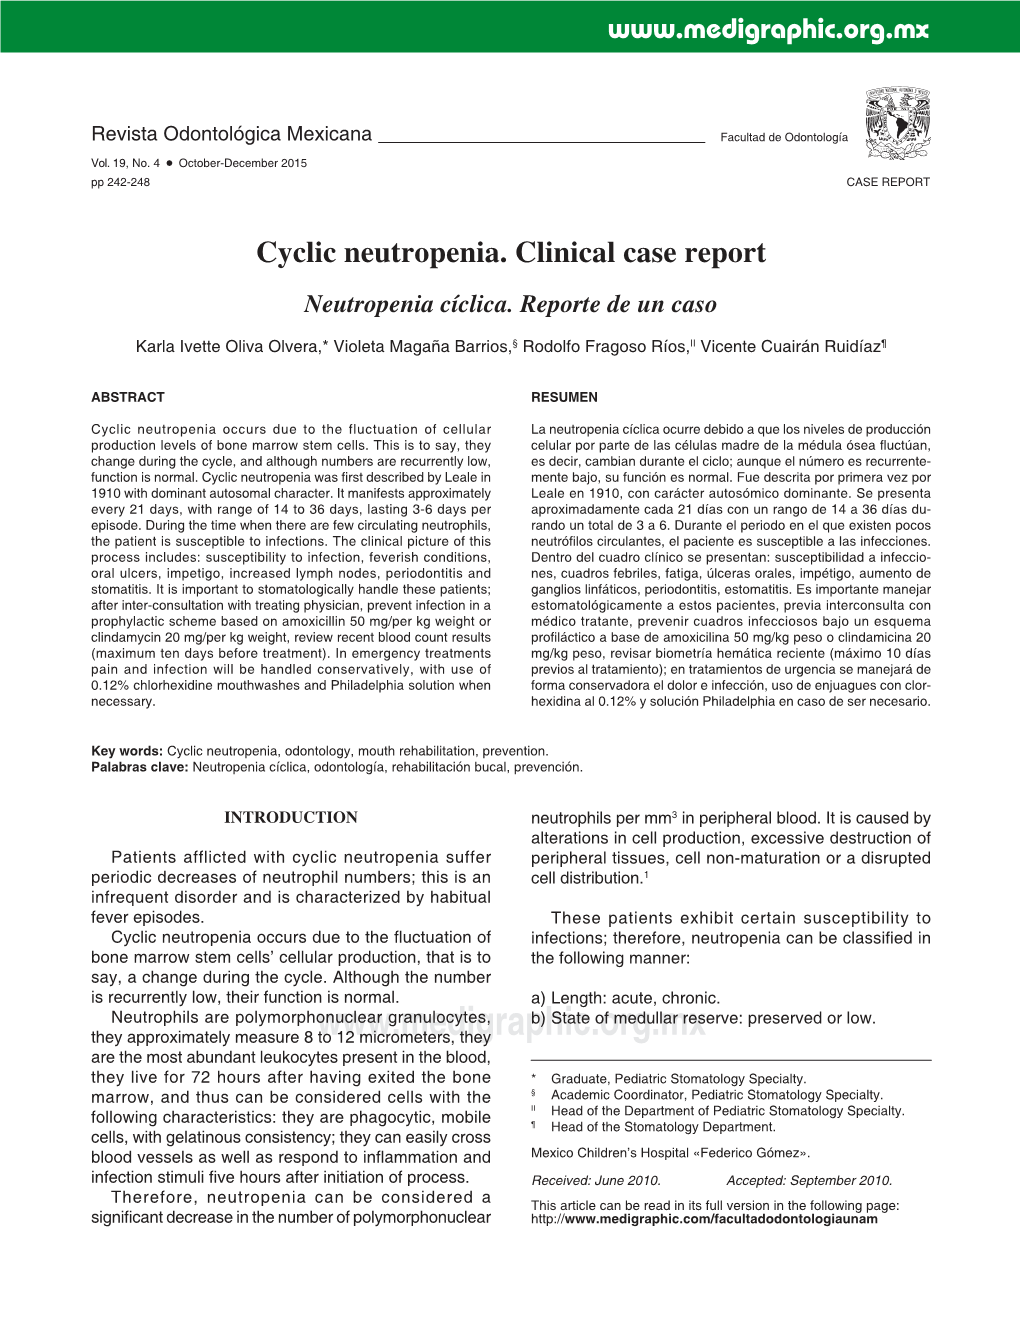 Cyclic Neutropenia. Clinical Case Report Neutropenia Cíclica